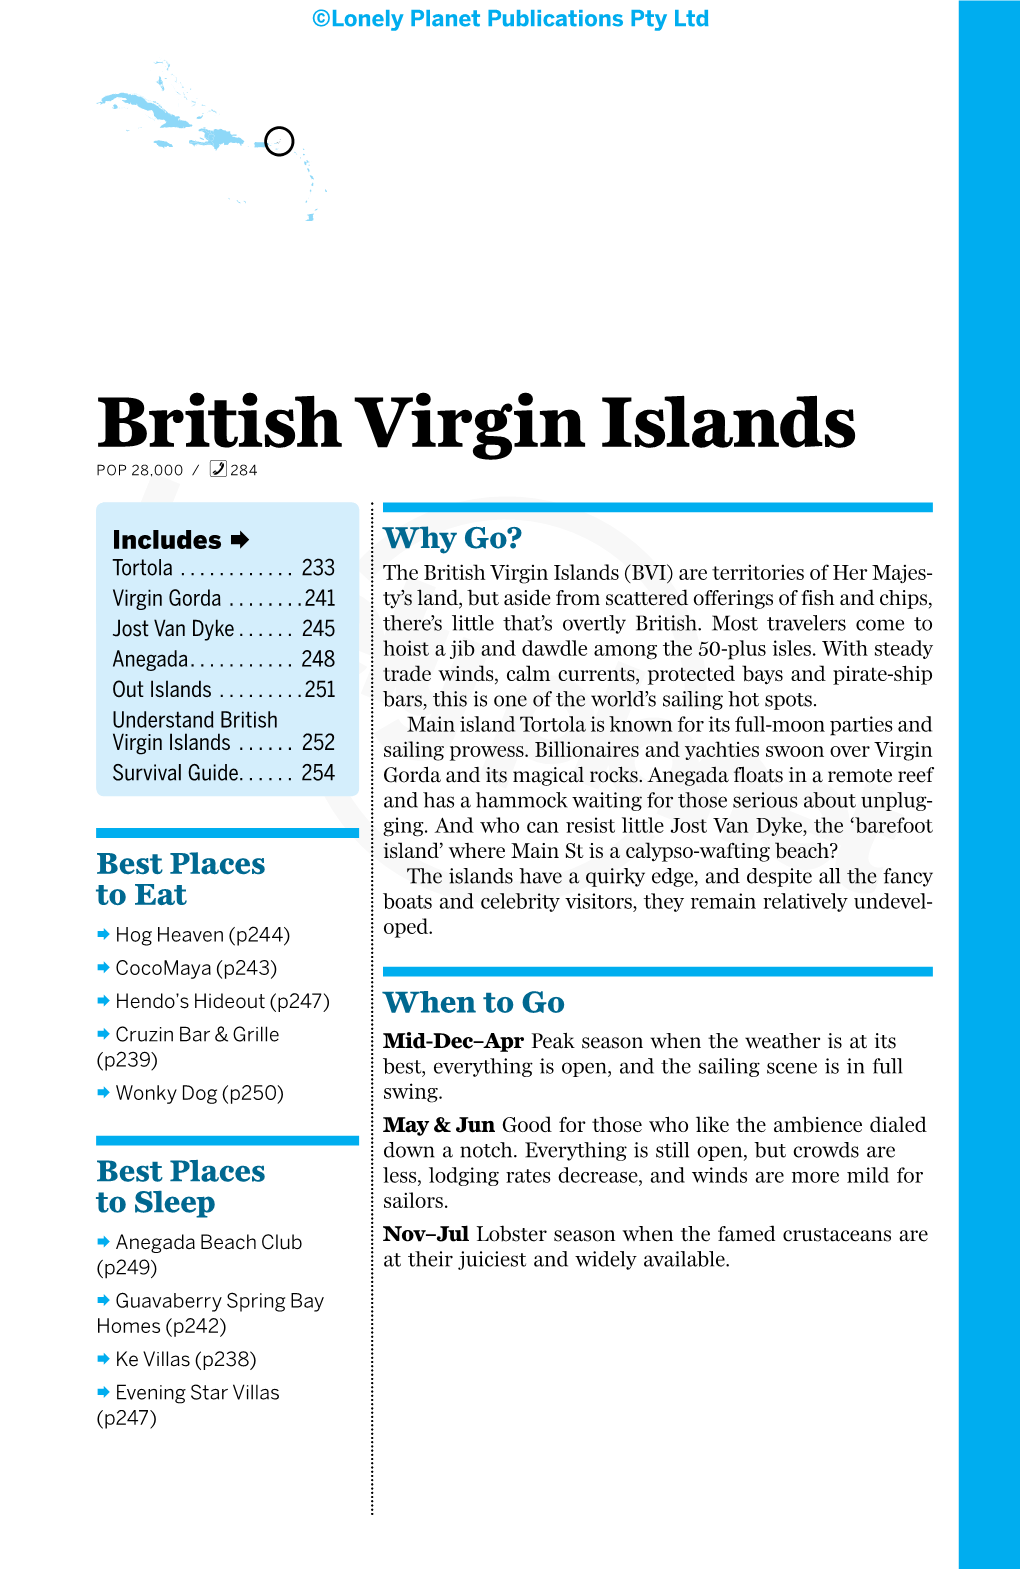 British Virgin Islands (BVI) Are Territories of Her Majes- Virgin Gorda